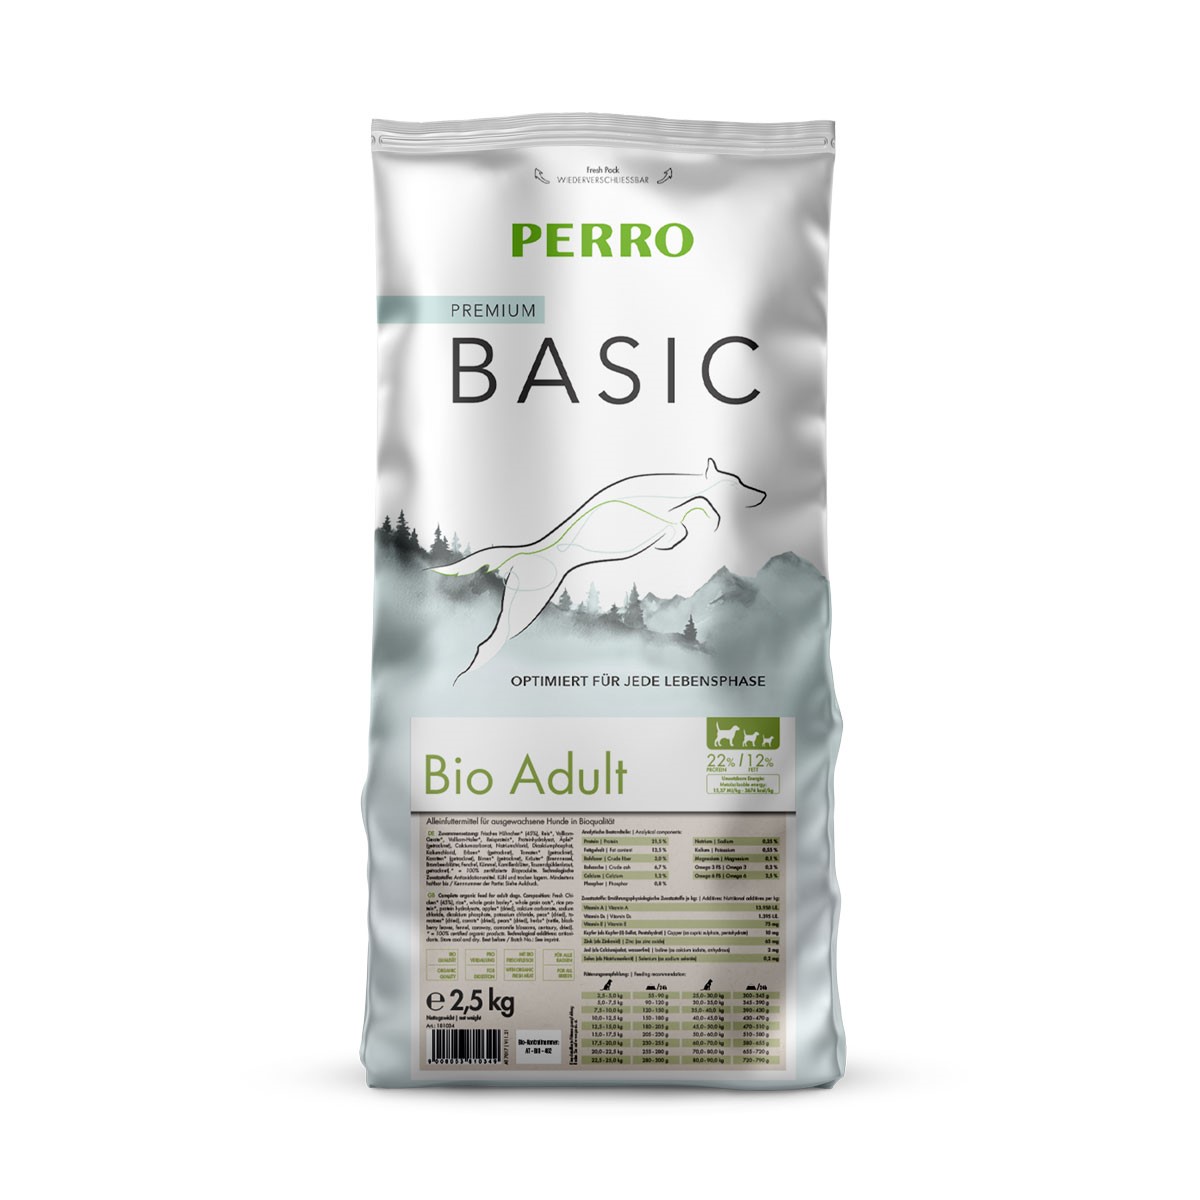 PERRO Basic Bio Adult